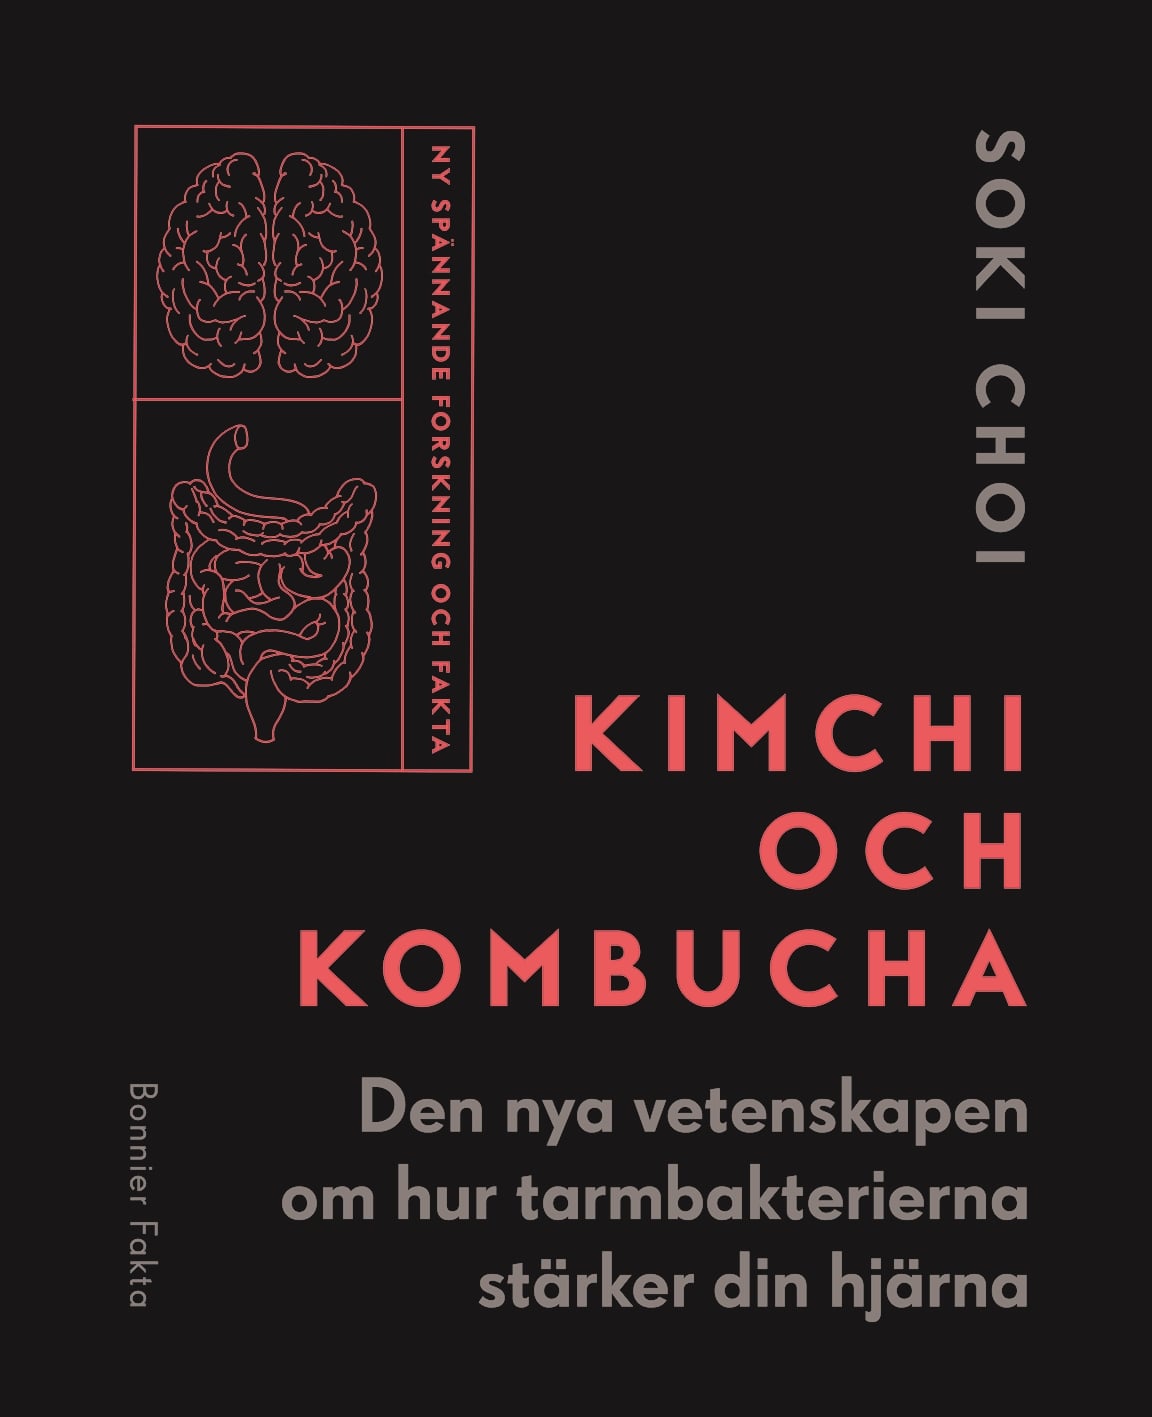 Kimchi och Kombucha - bok om Kombucha